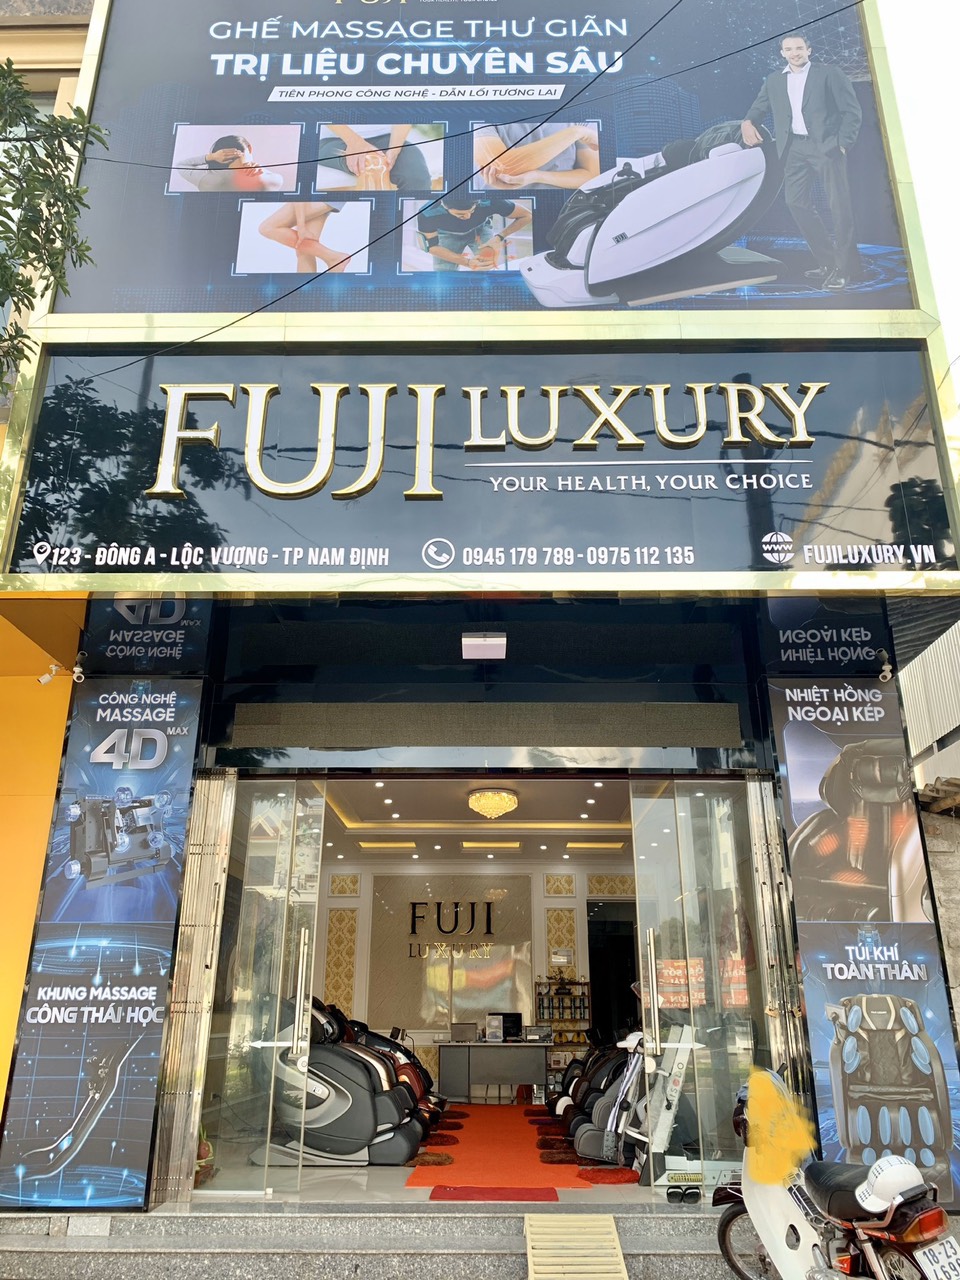 ghé massage Fuji Luxury Nam Định